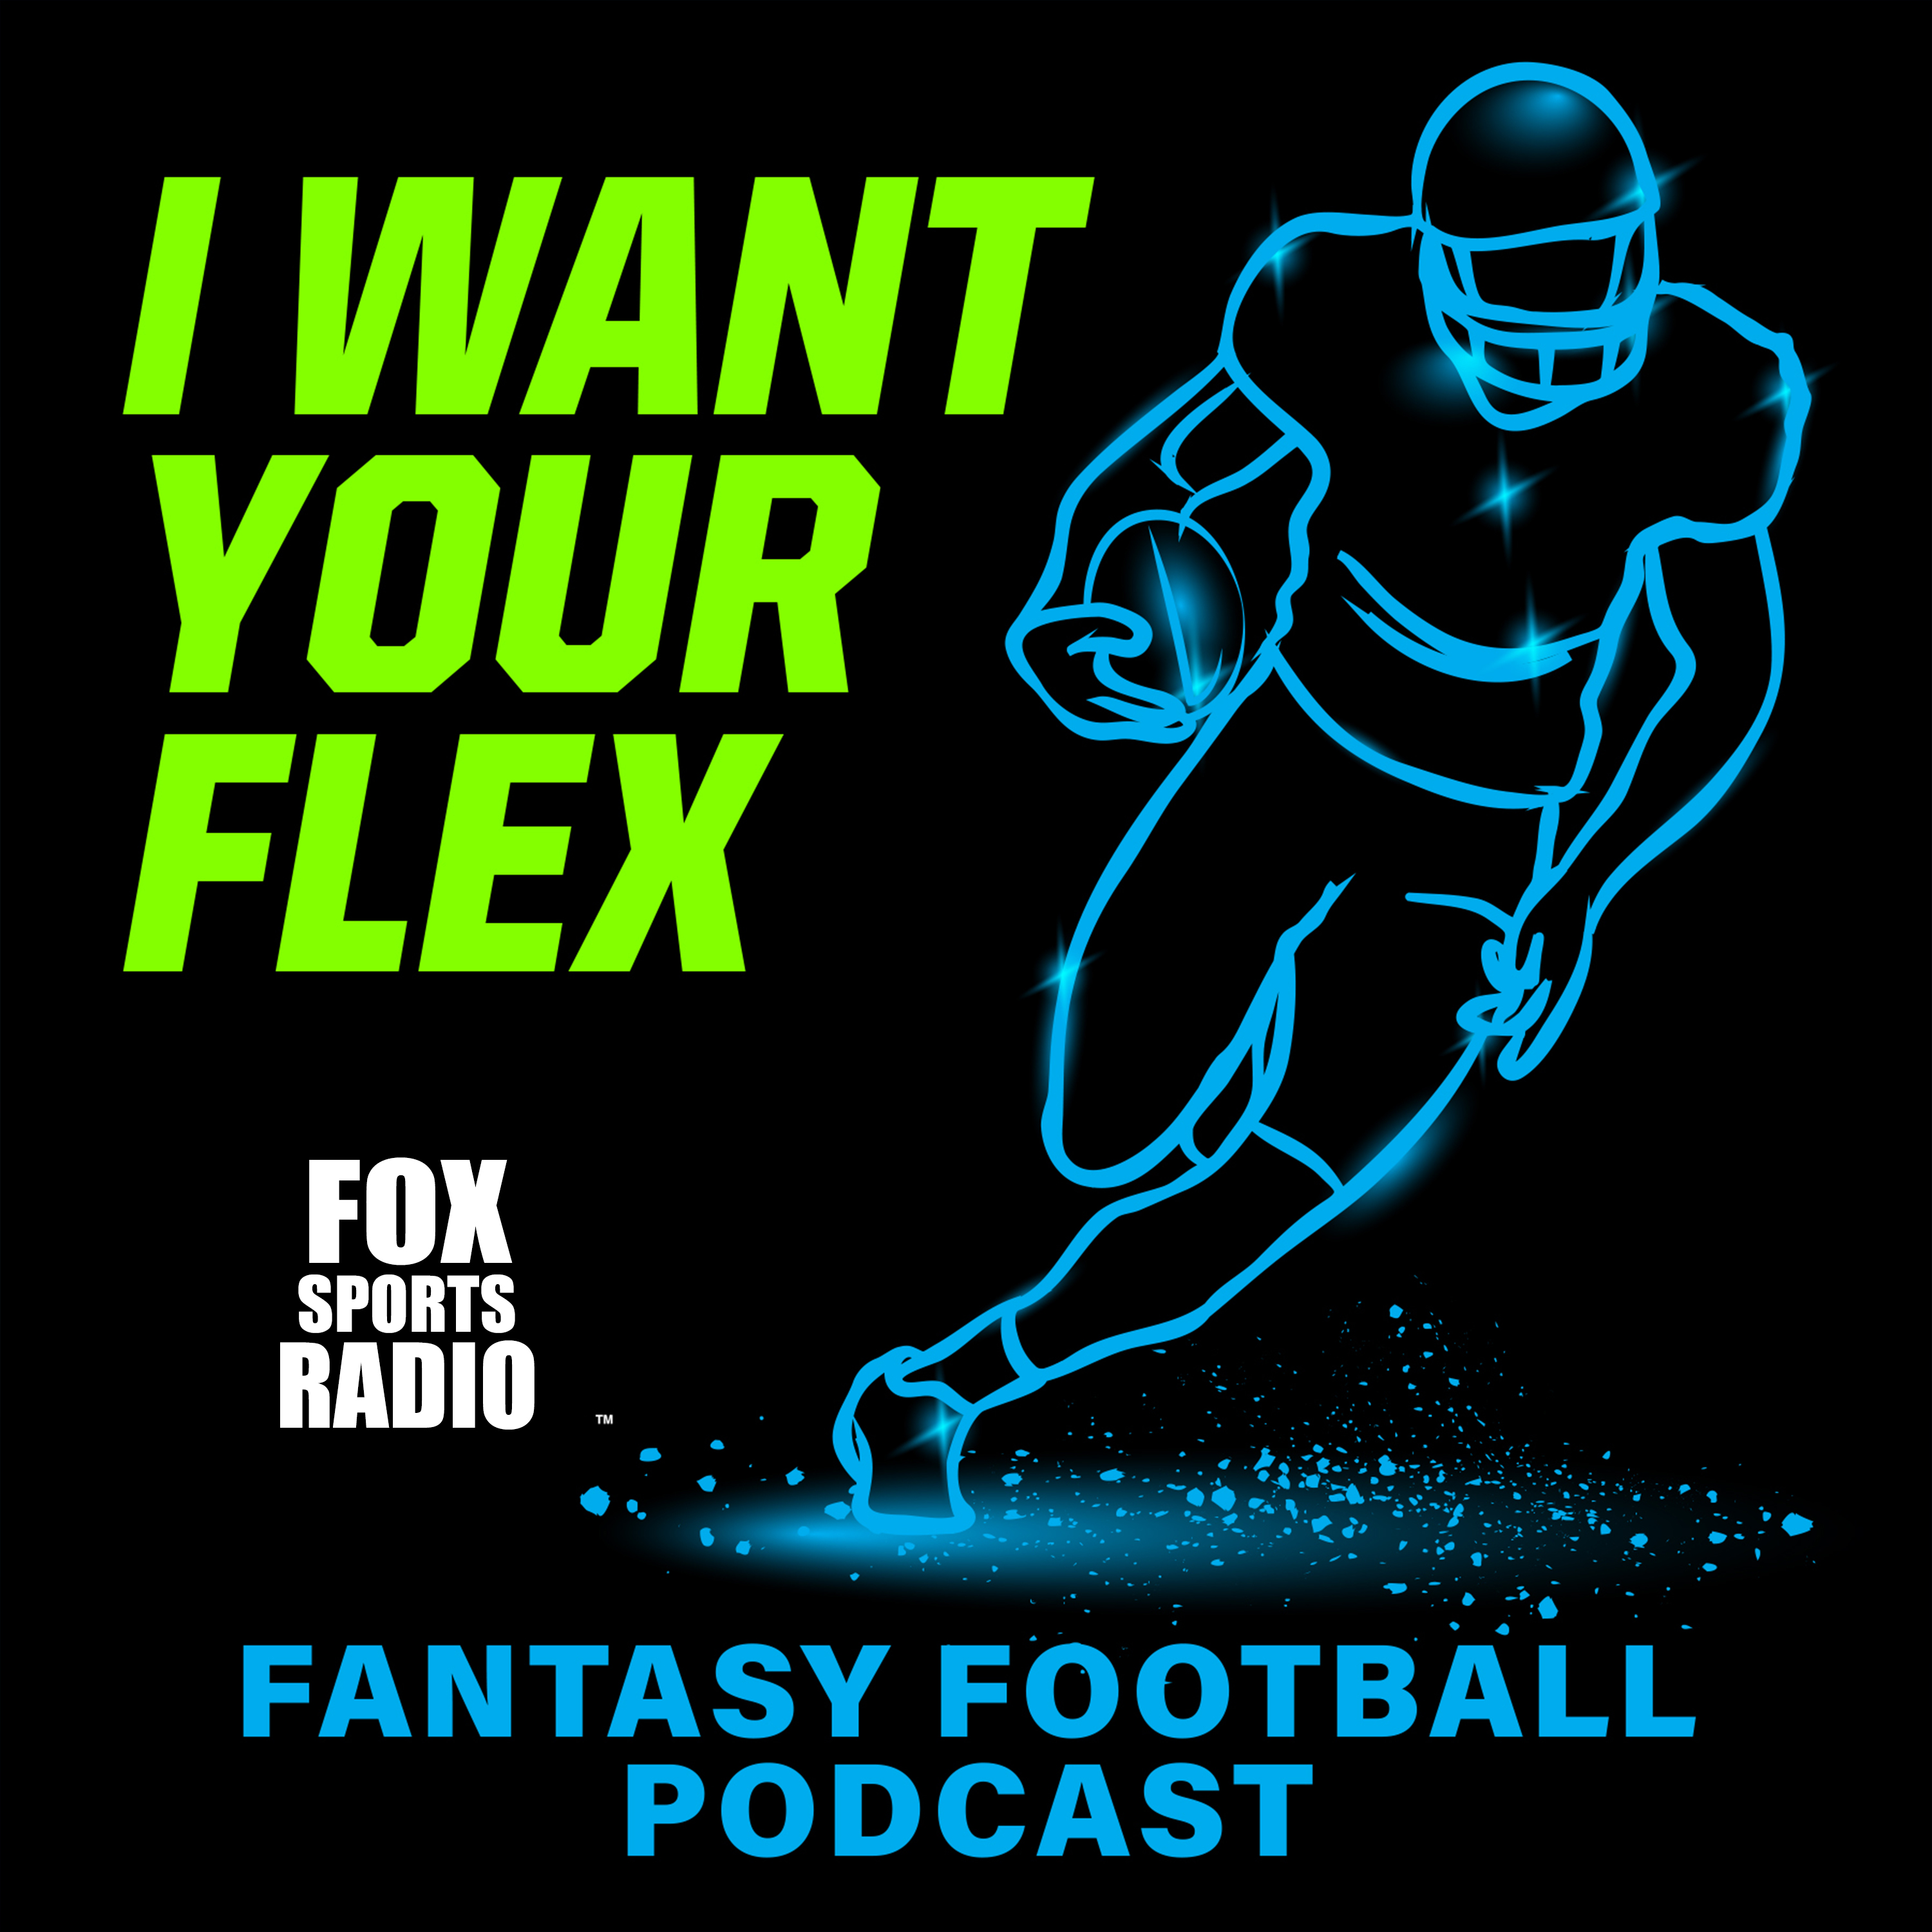 I WANT YOUR FLEX - Super Bowl Preview